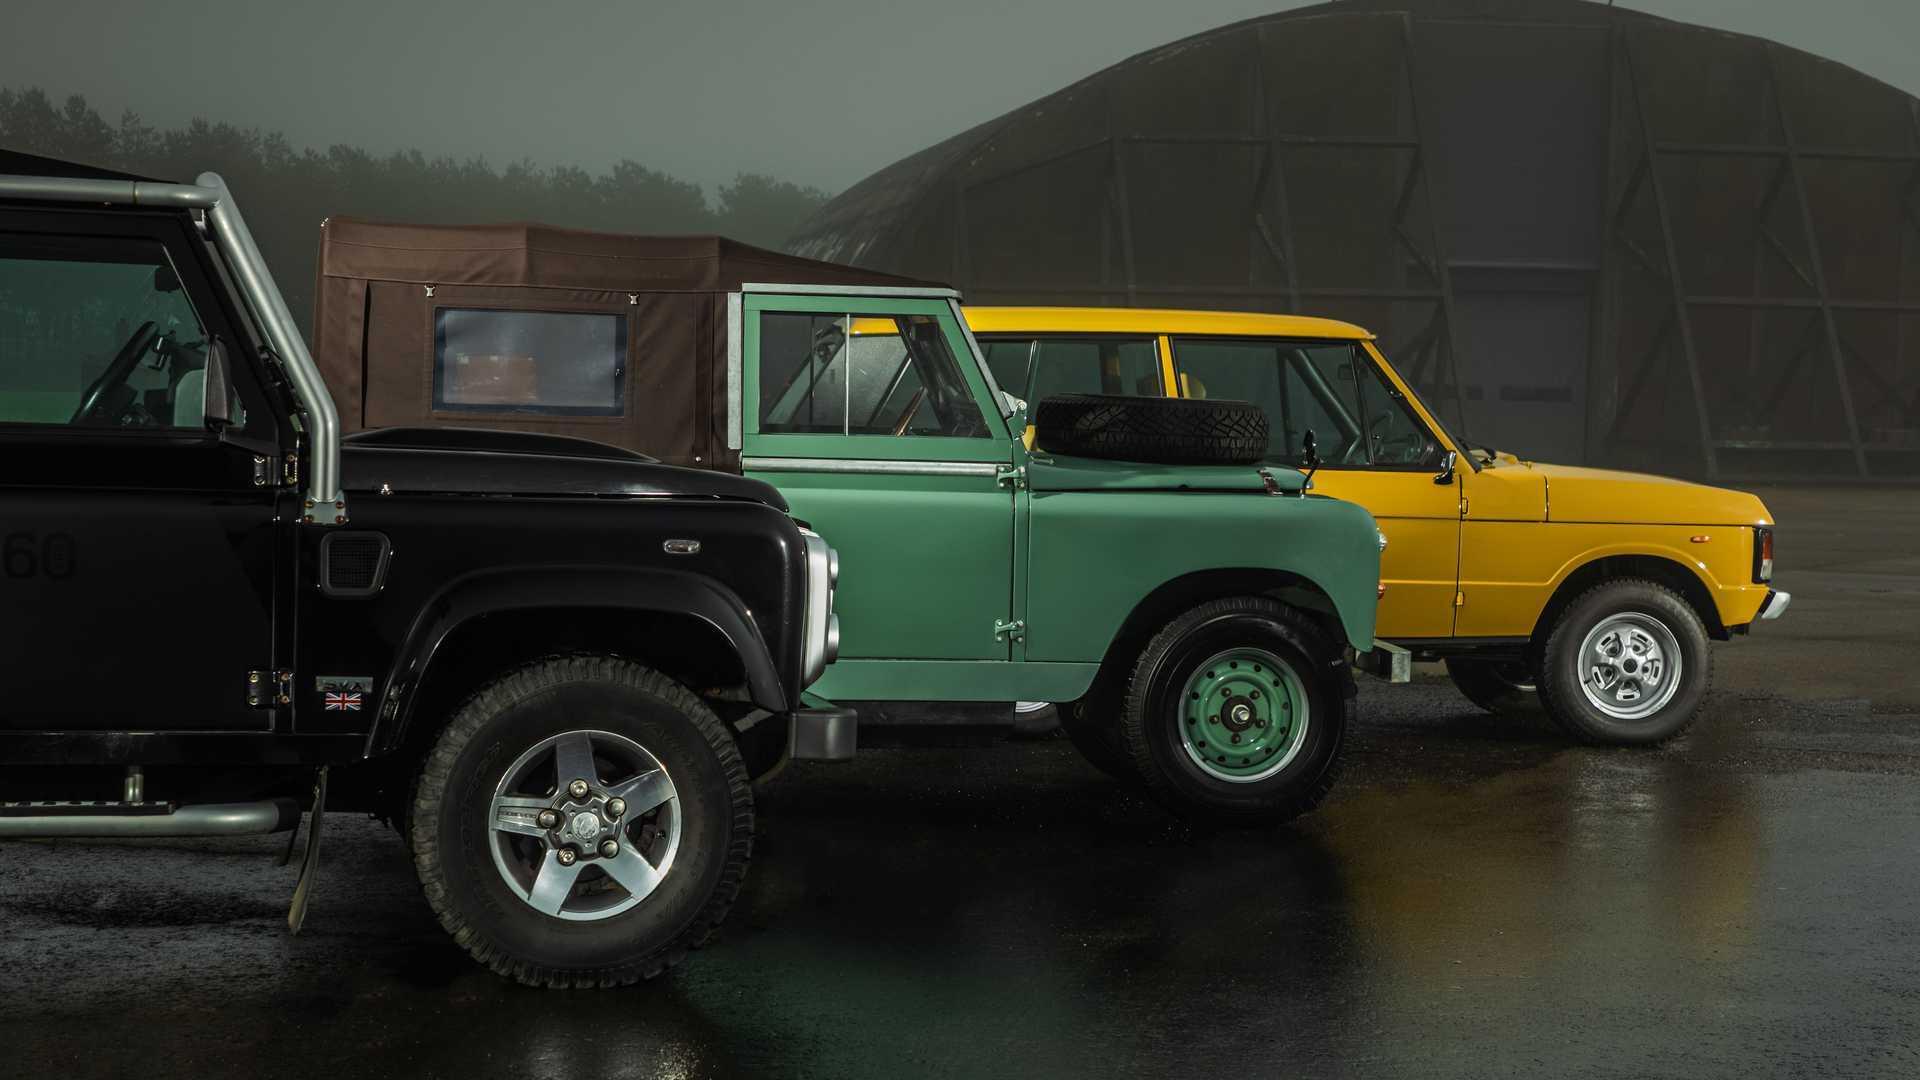 Everrati показала електрокари на базі класичних Range Rover та Land Rover Defender